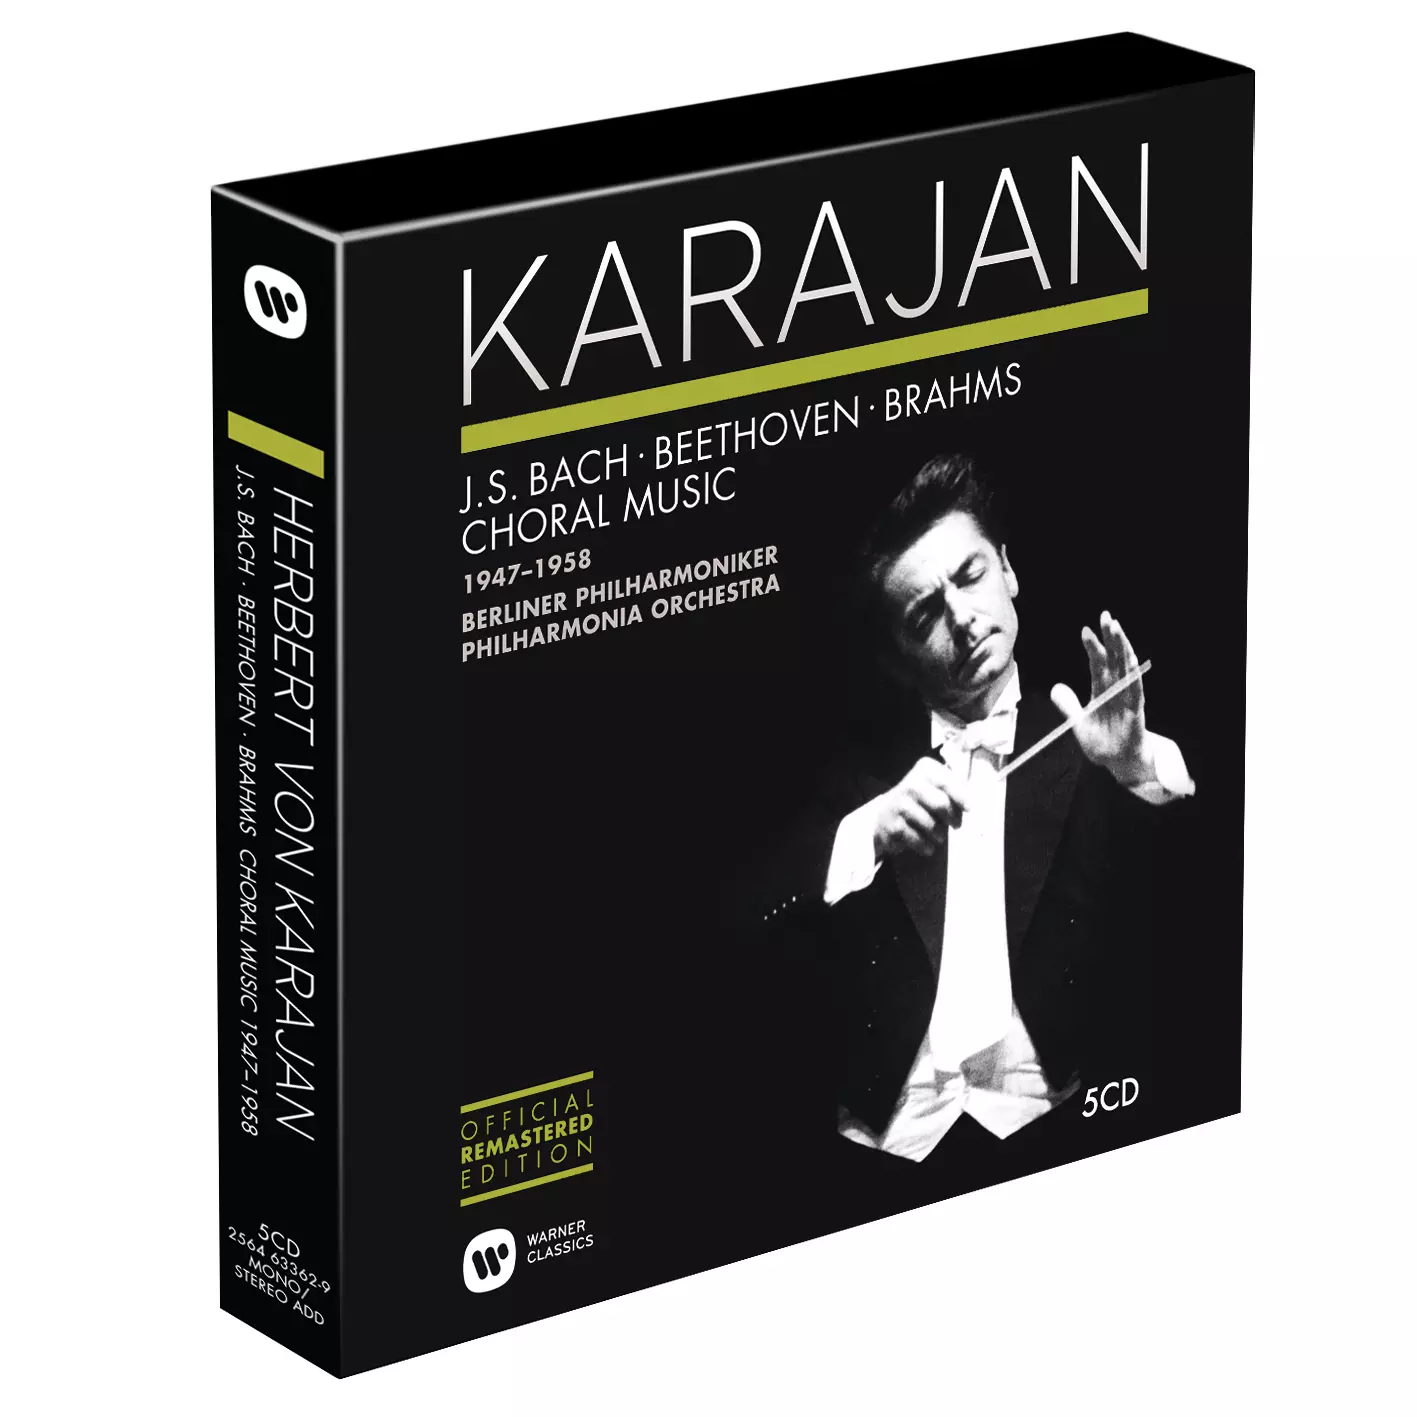 Karajan 2014: Choral & Vocal recordings Oct 1947 - Sep 1958